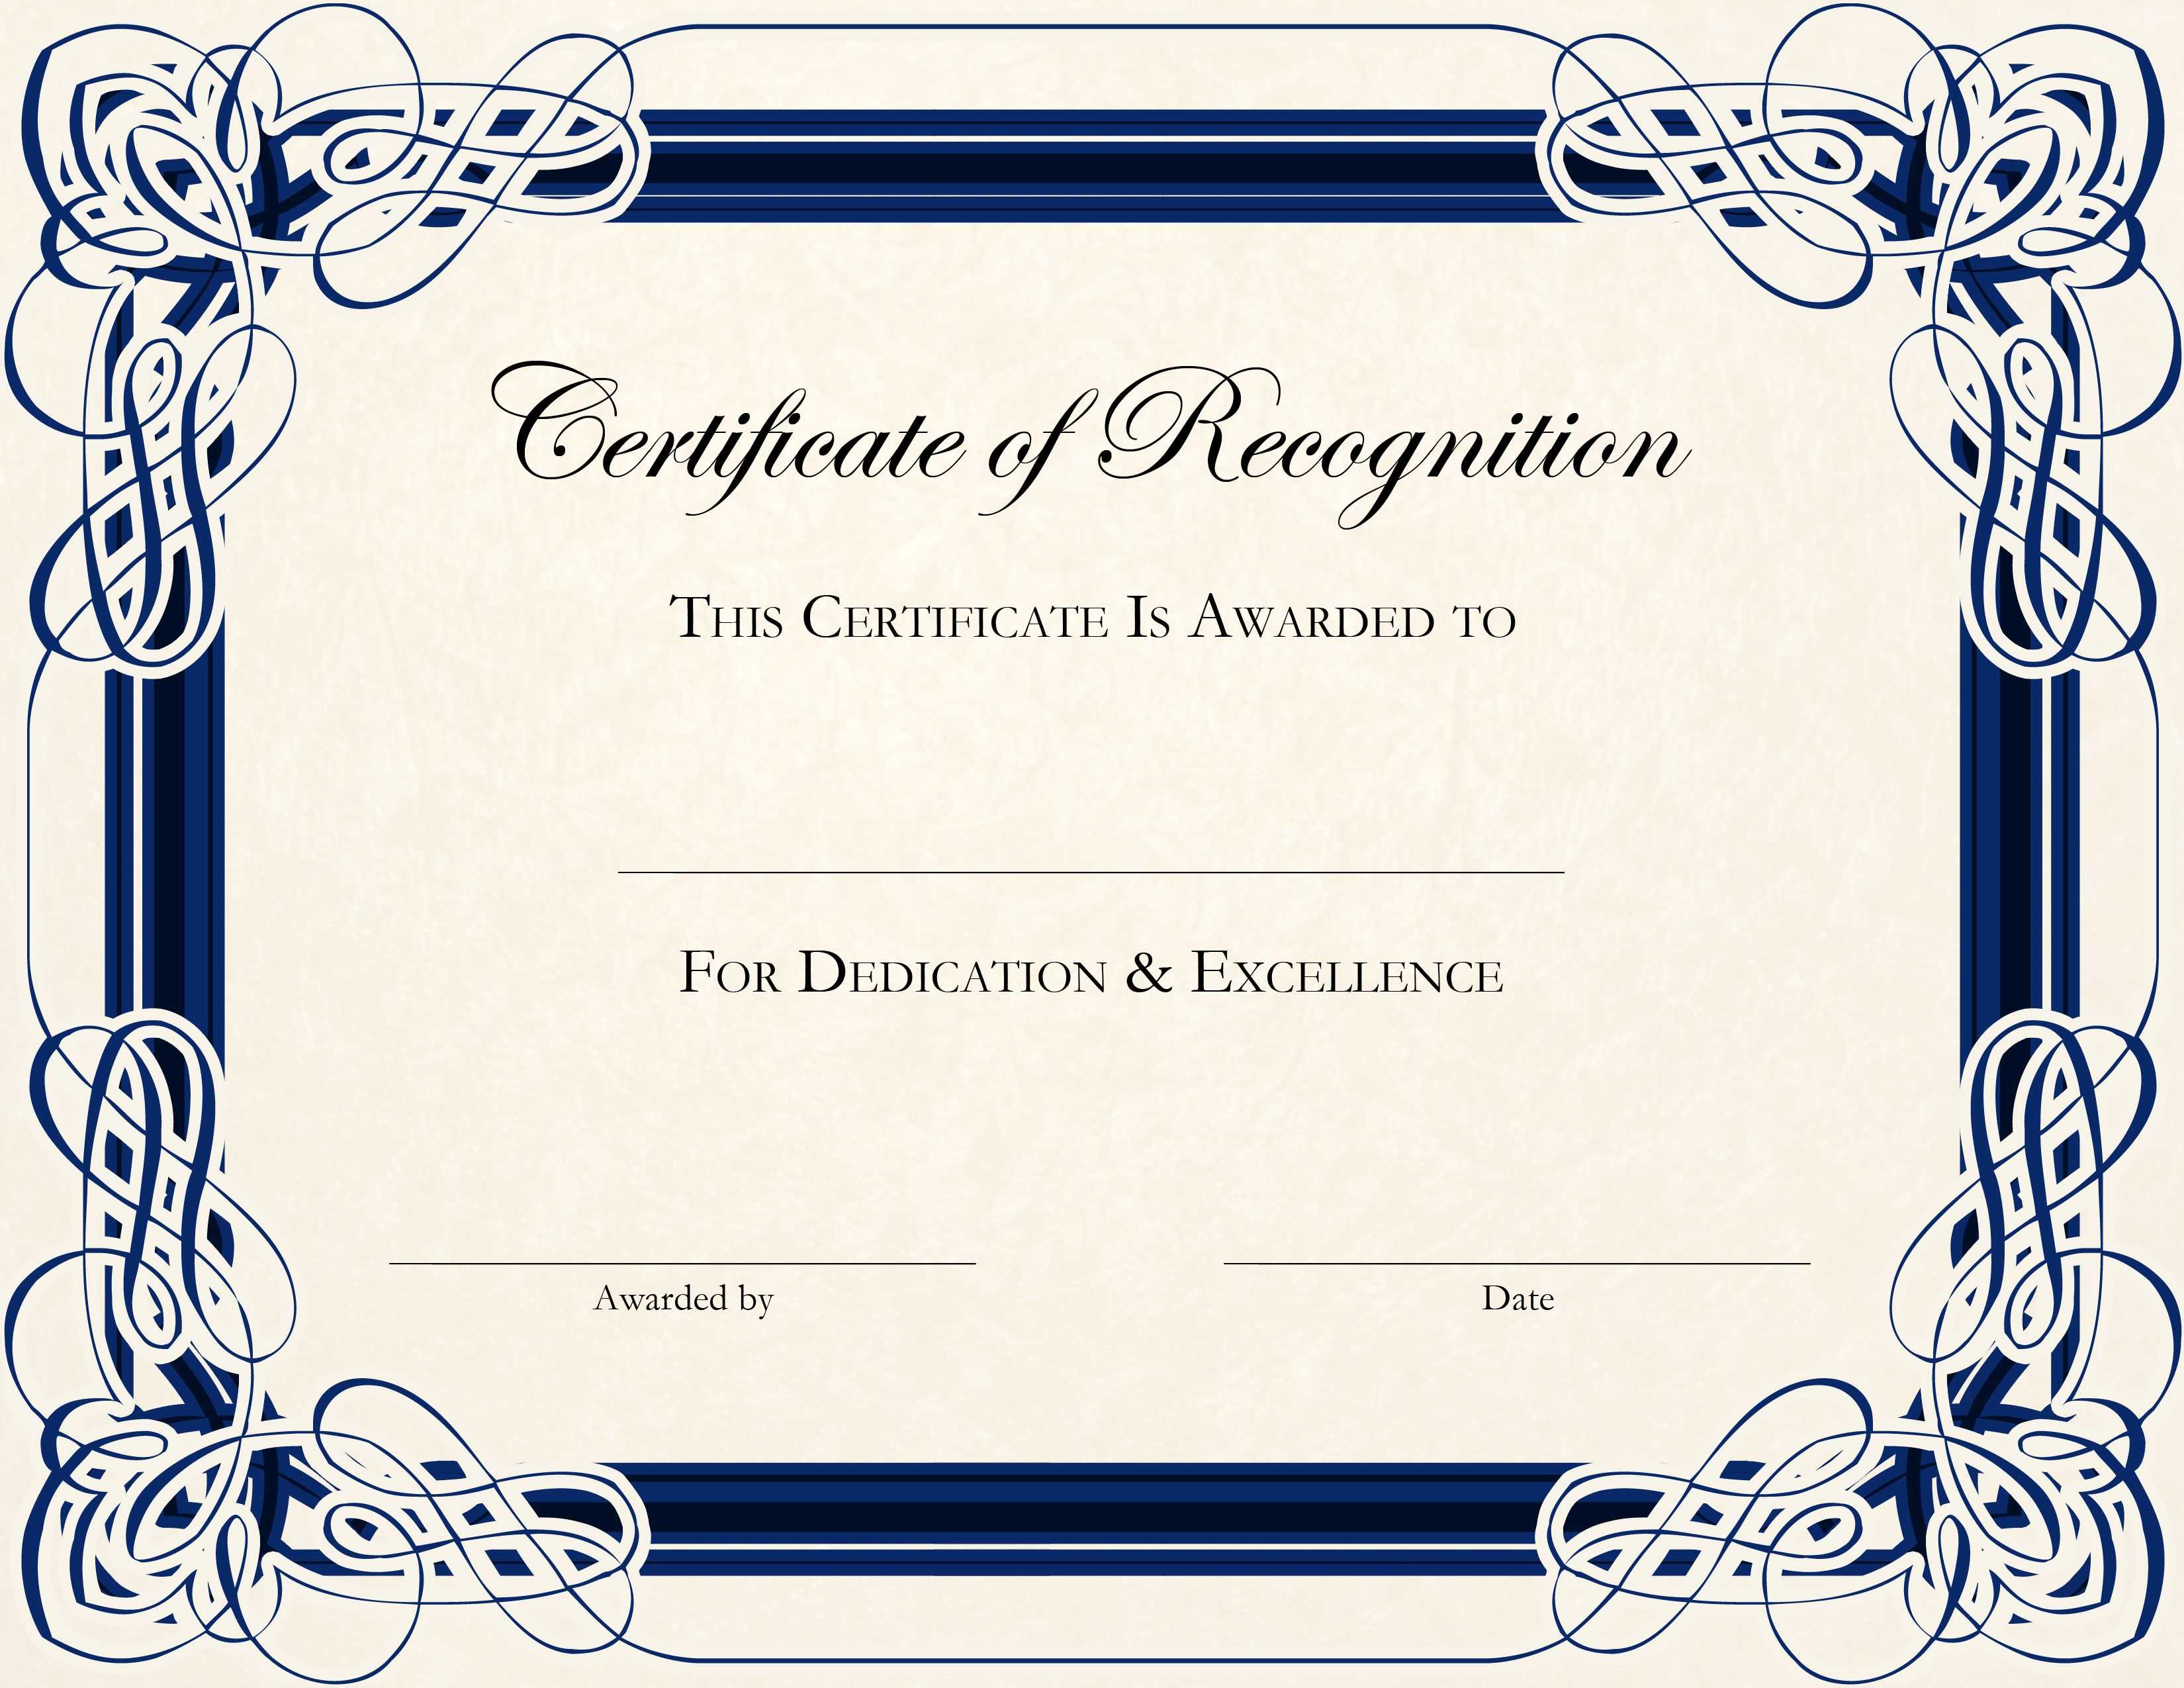 Certificate Of Appreciation Template Word Doc In Certificate Of Excellence Template Word